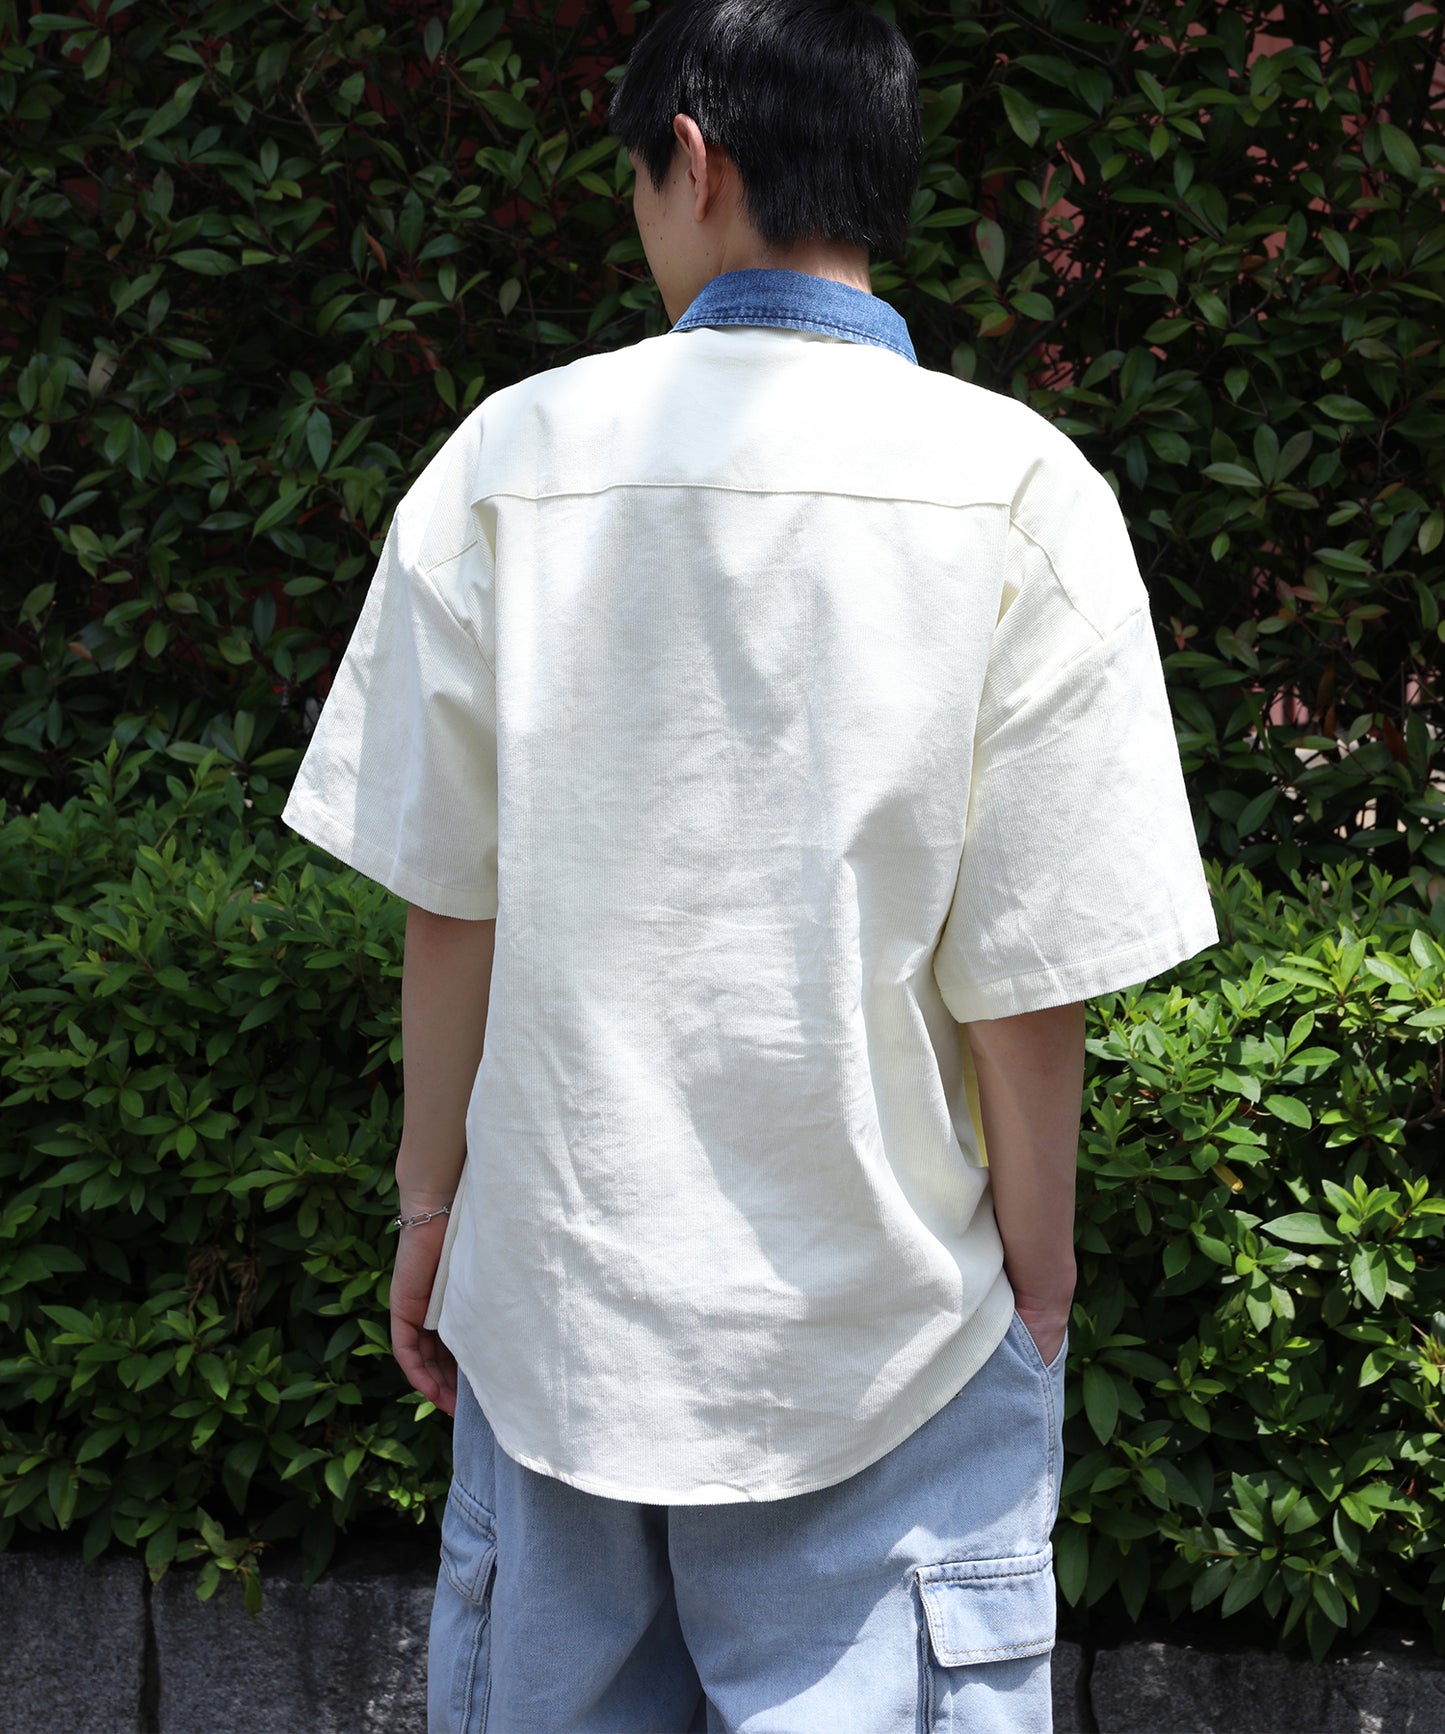 【HOOK -select- 】レトロ調人物刺繍夏コーデュロイ半袖シャツ